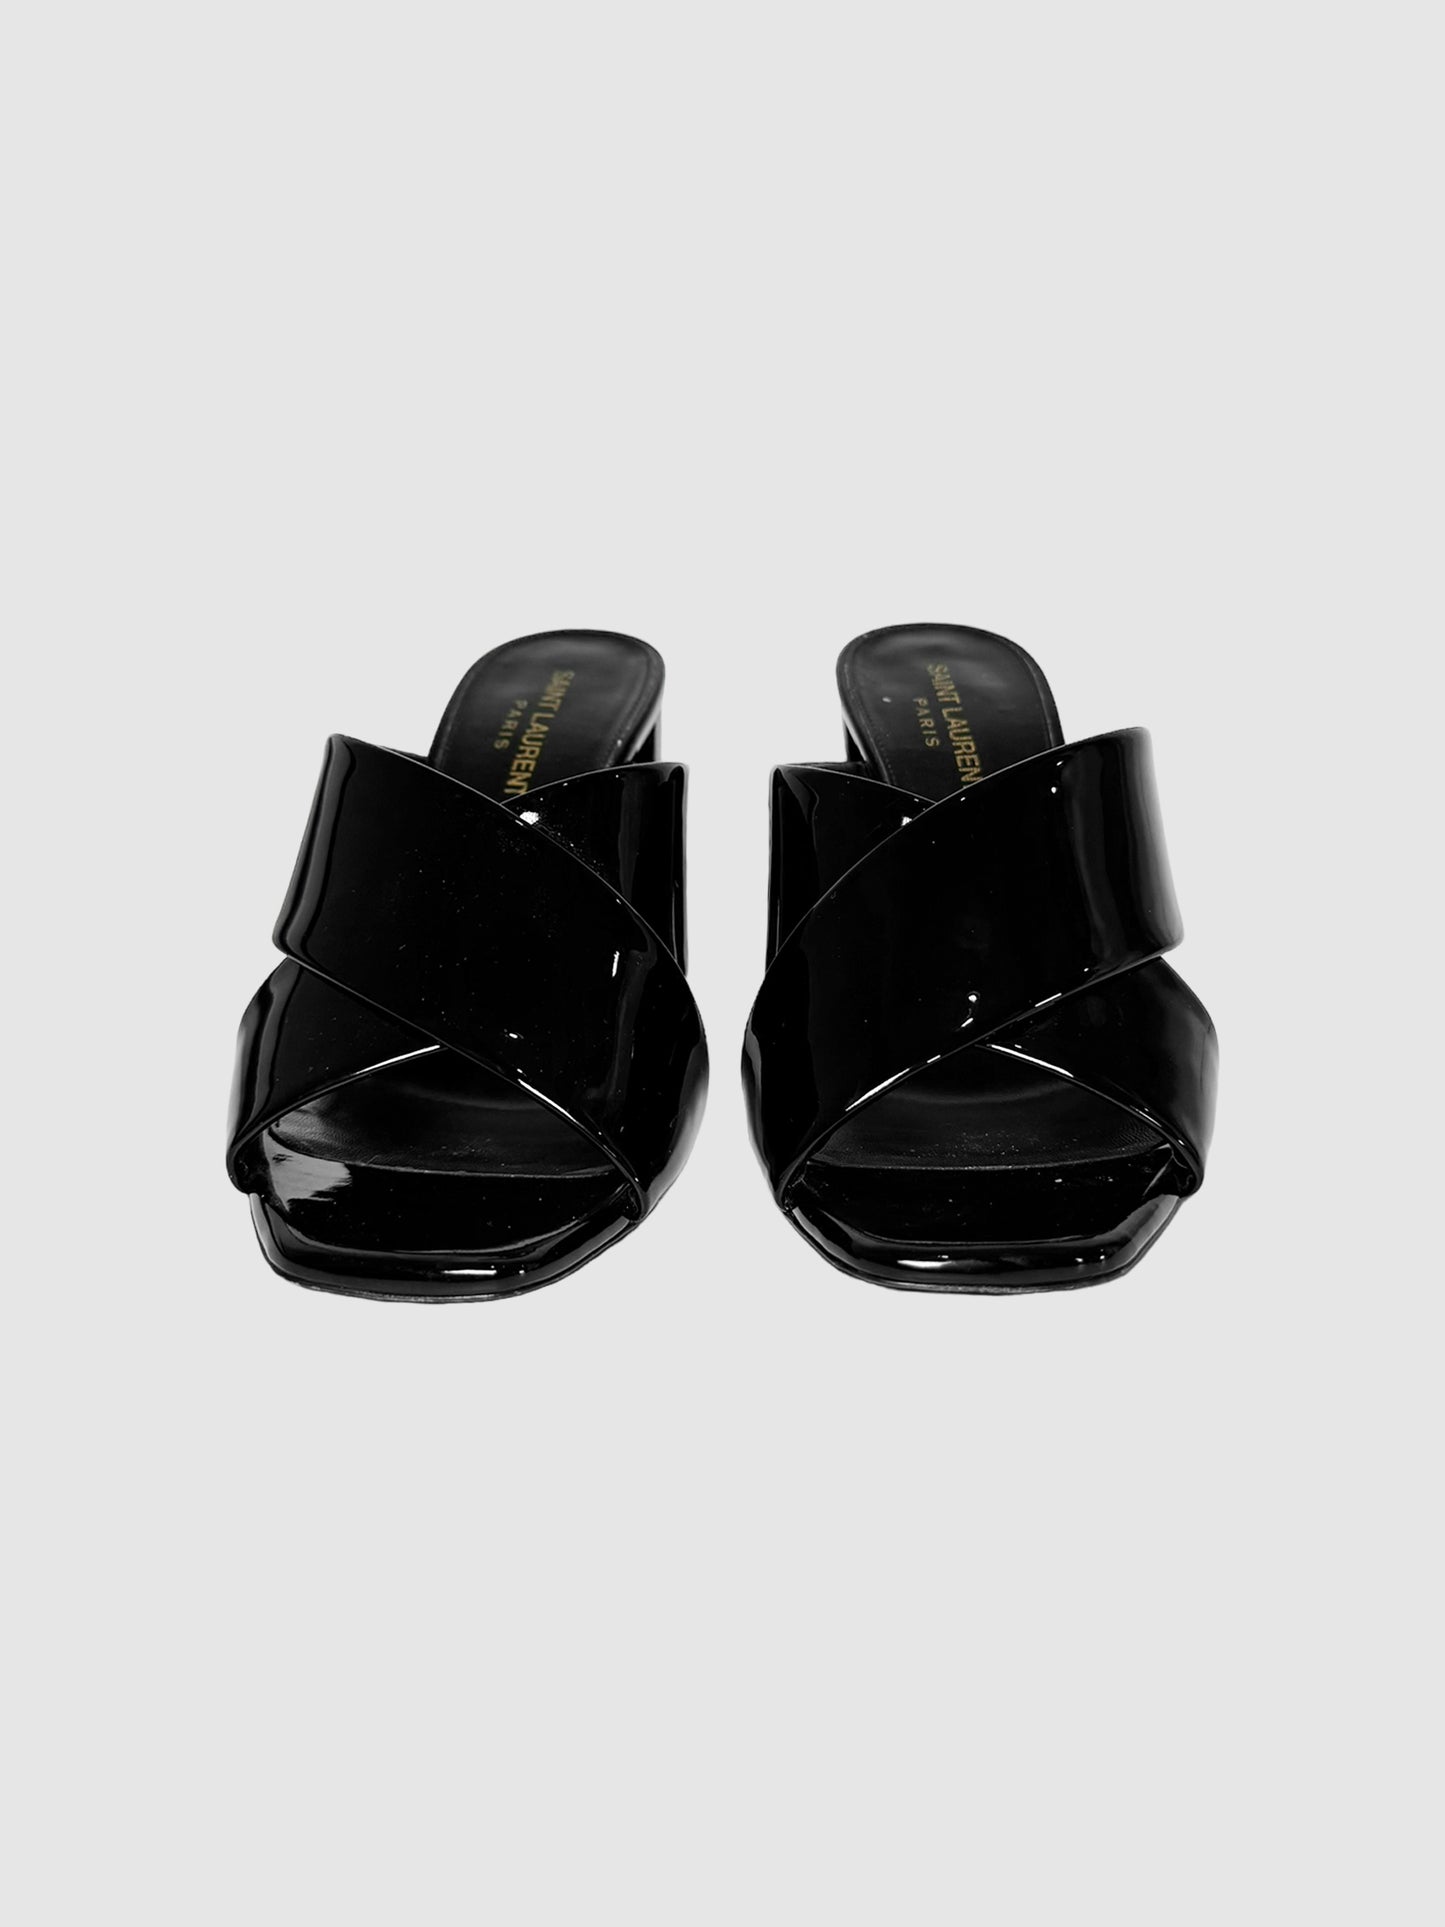 Loulou Criss Cross Sandals - Size 39